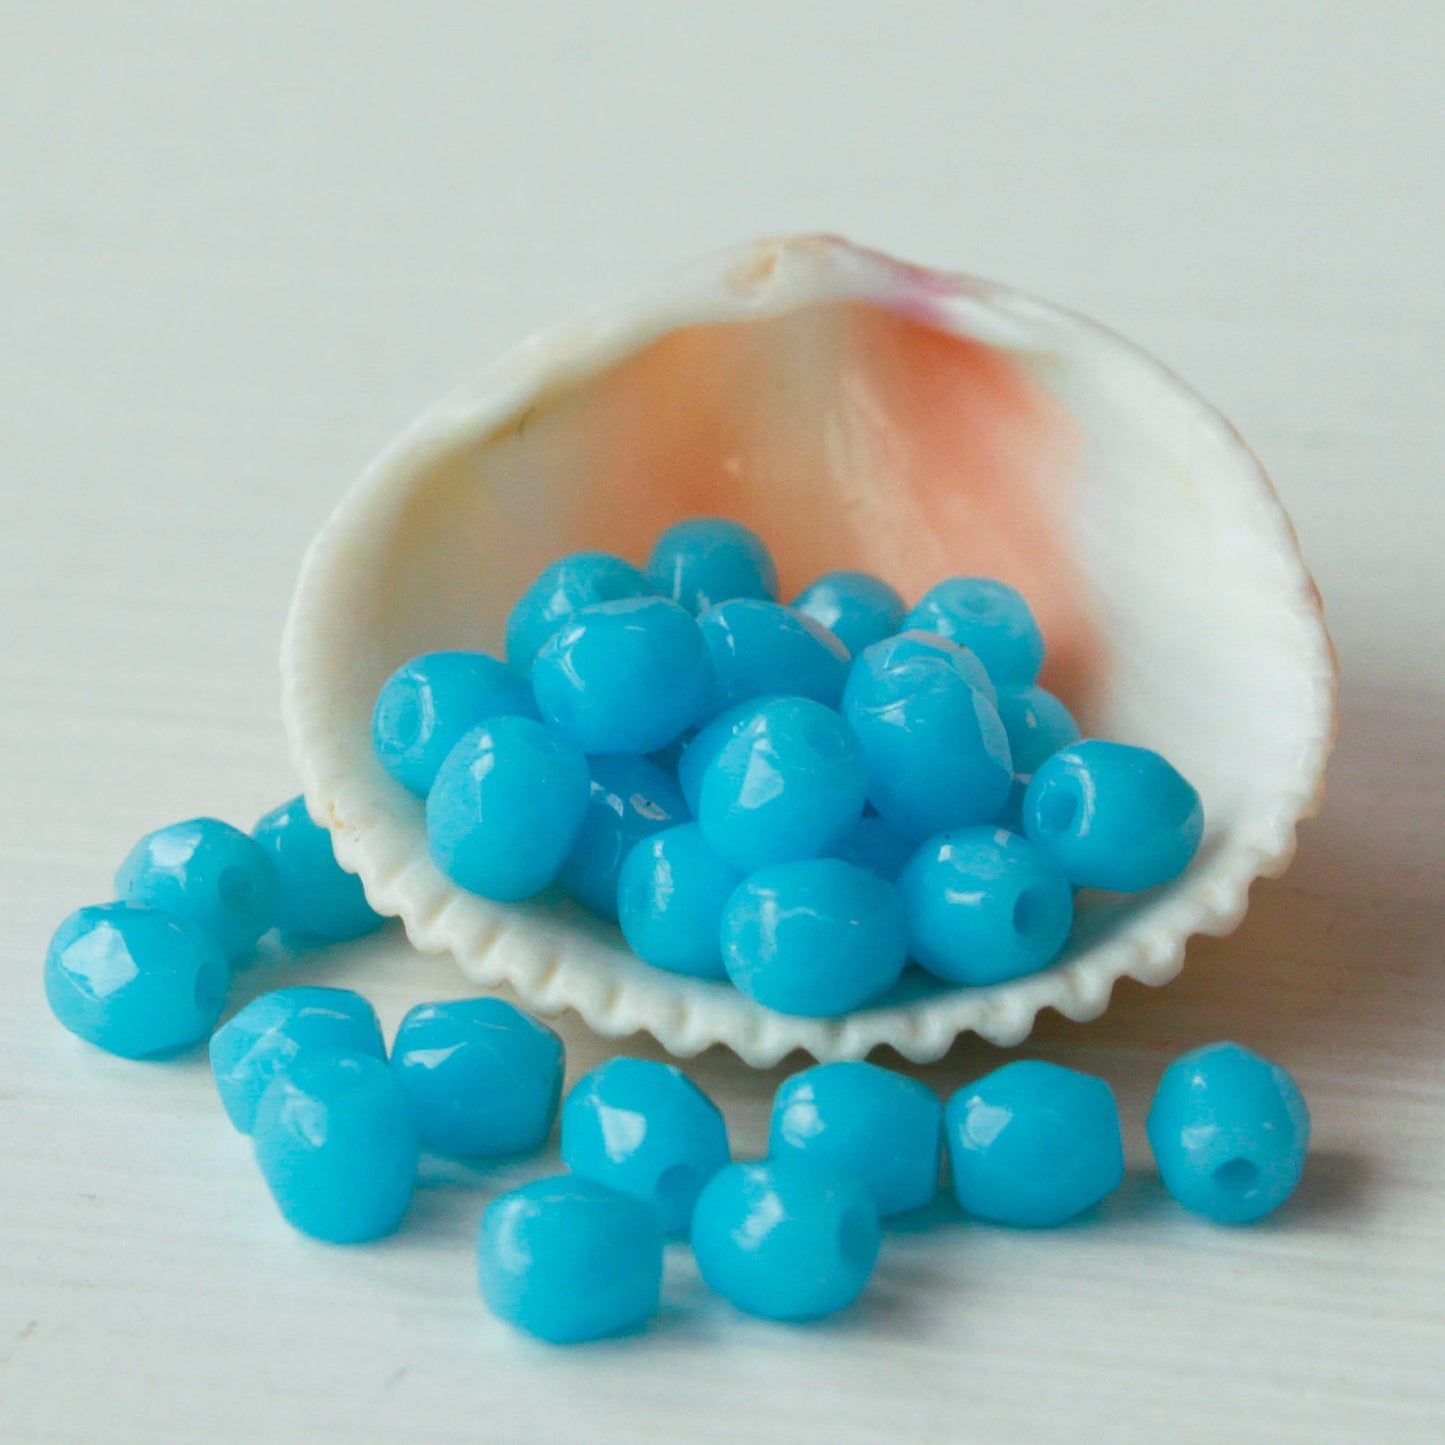 3mm Round Glass Beads - Seafoam Opaline - 50 Beads